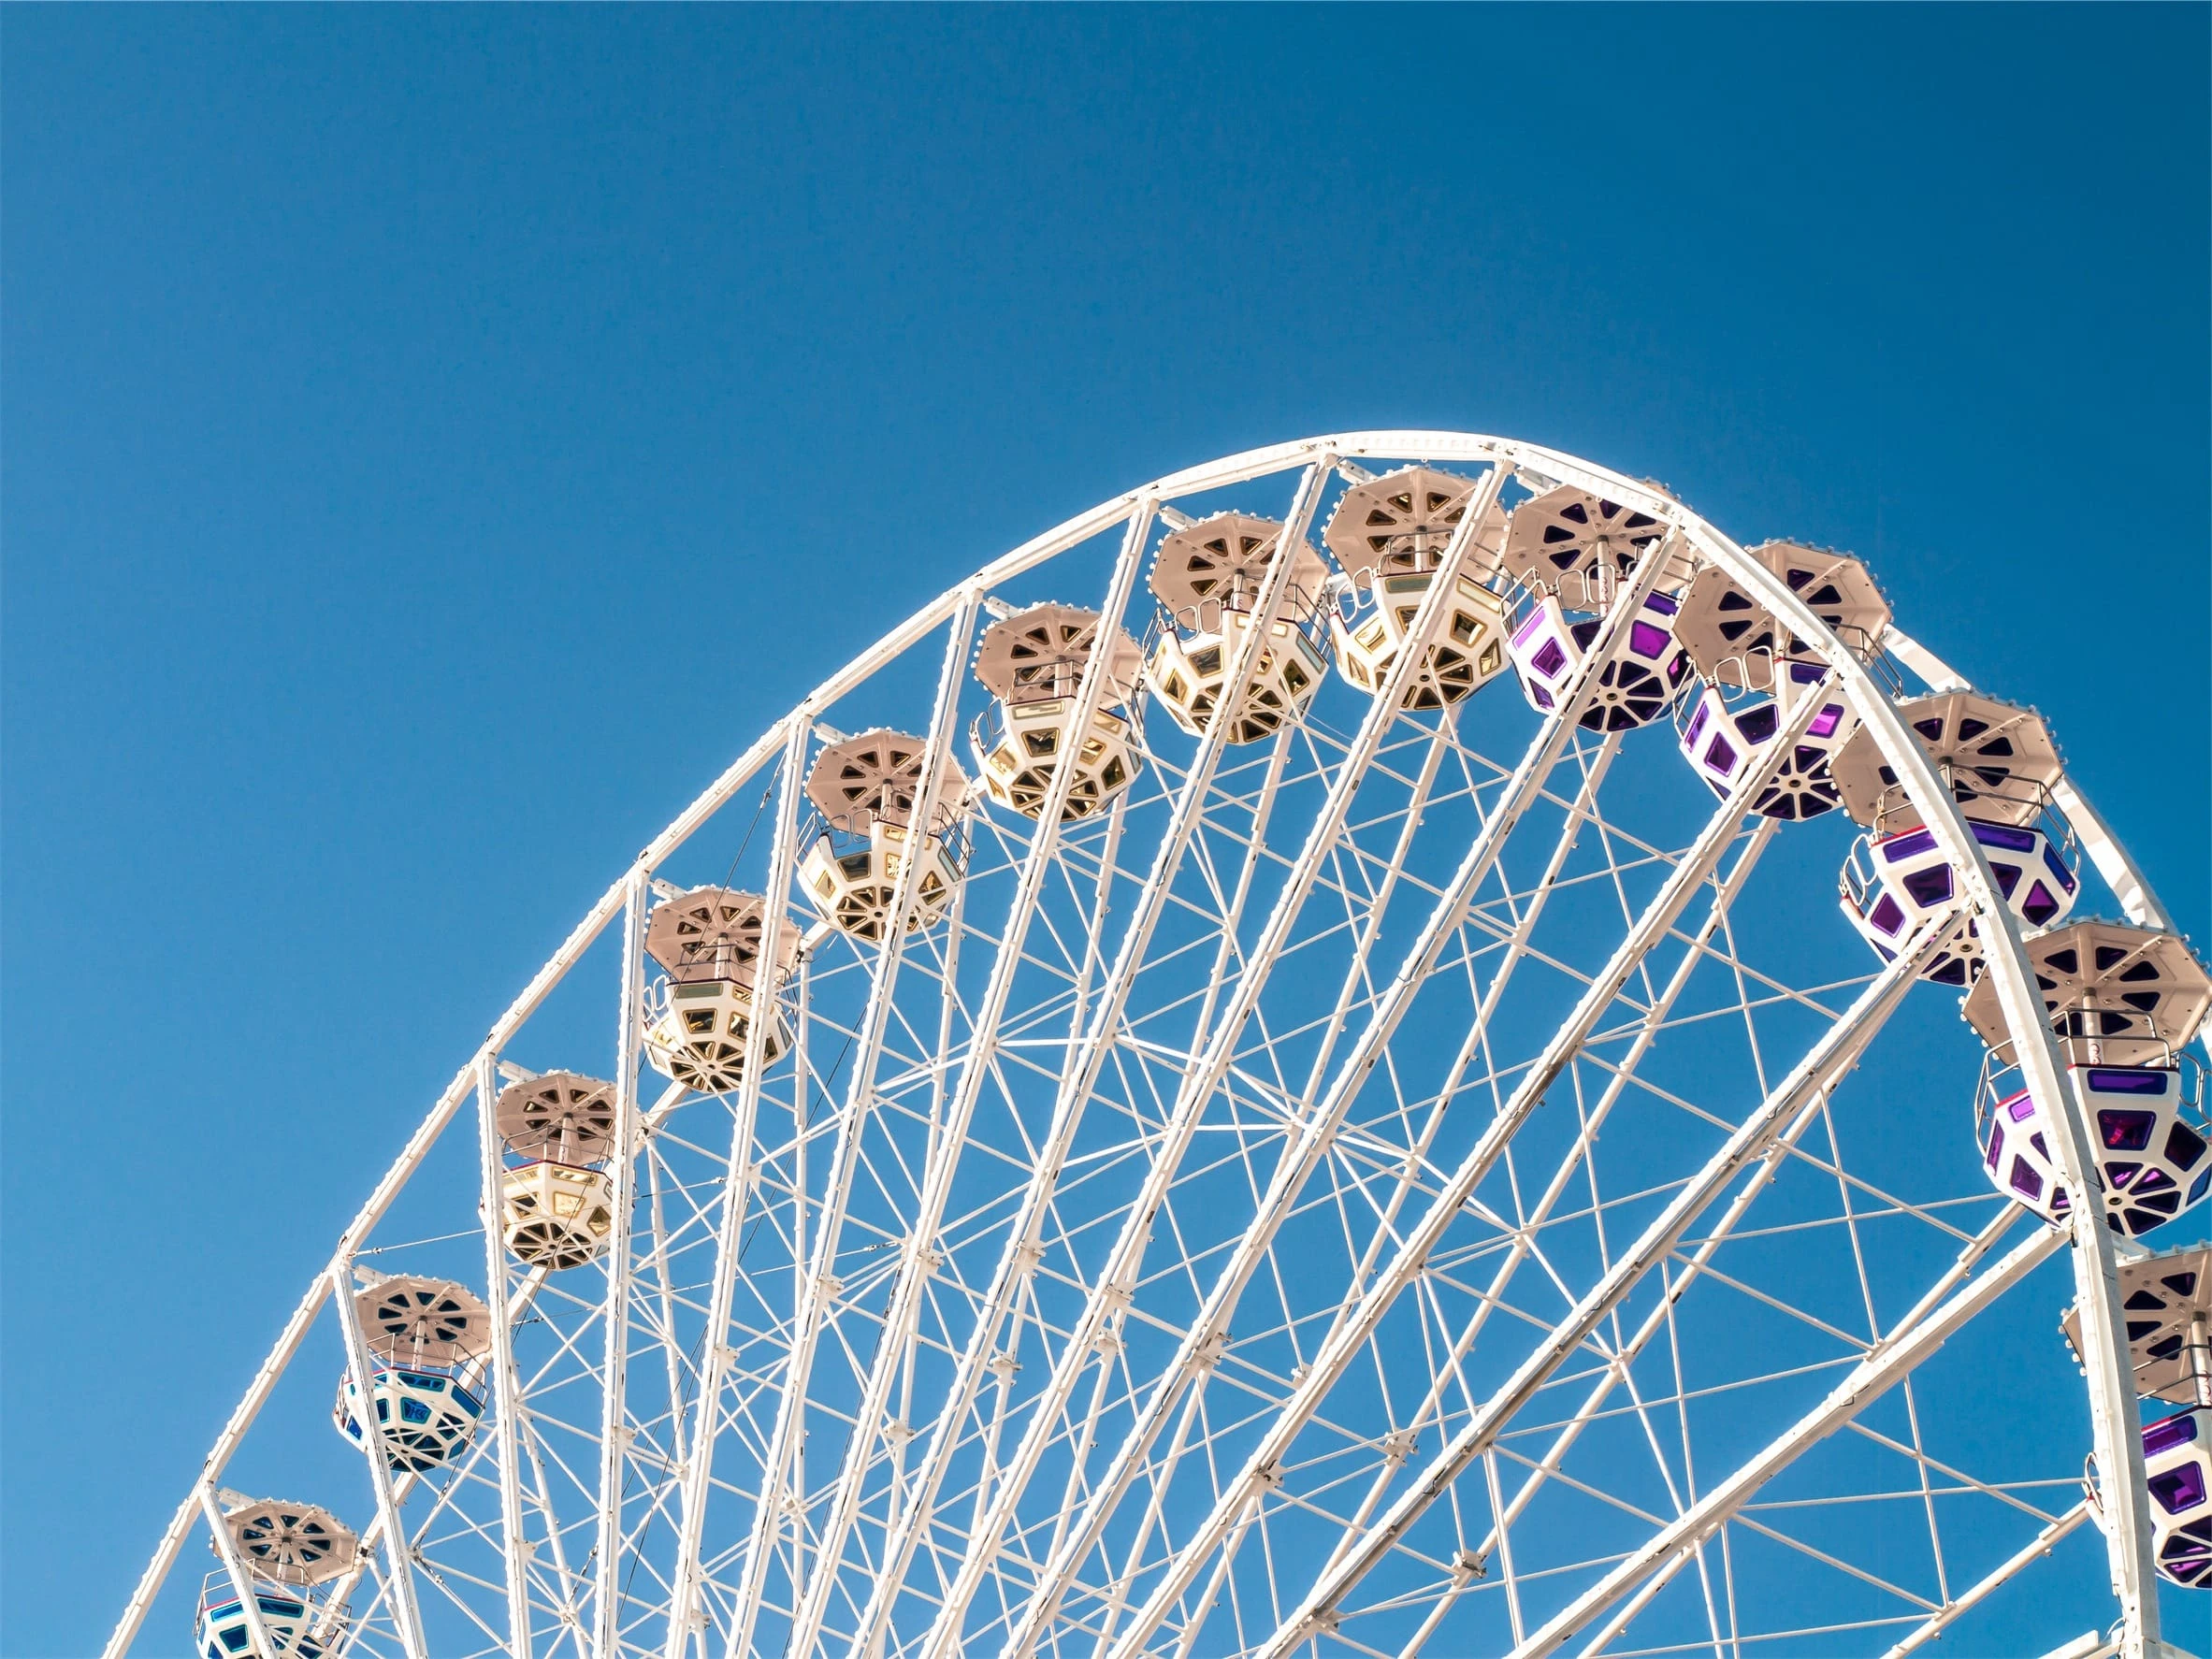 Amusement park Ferris wheel